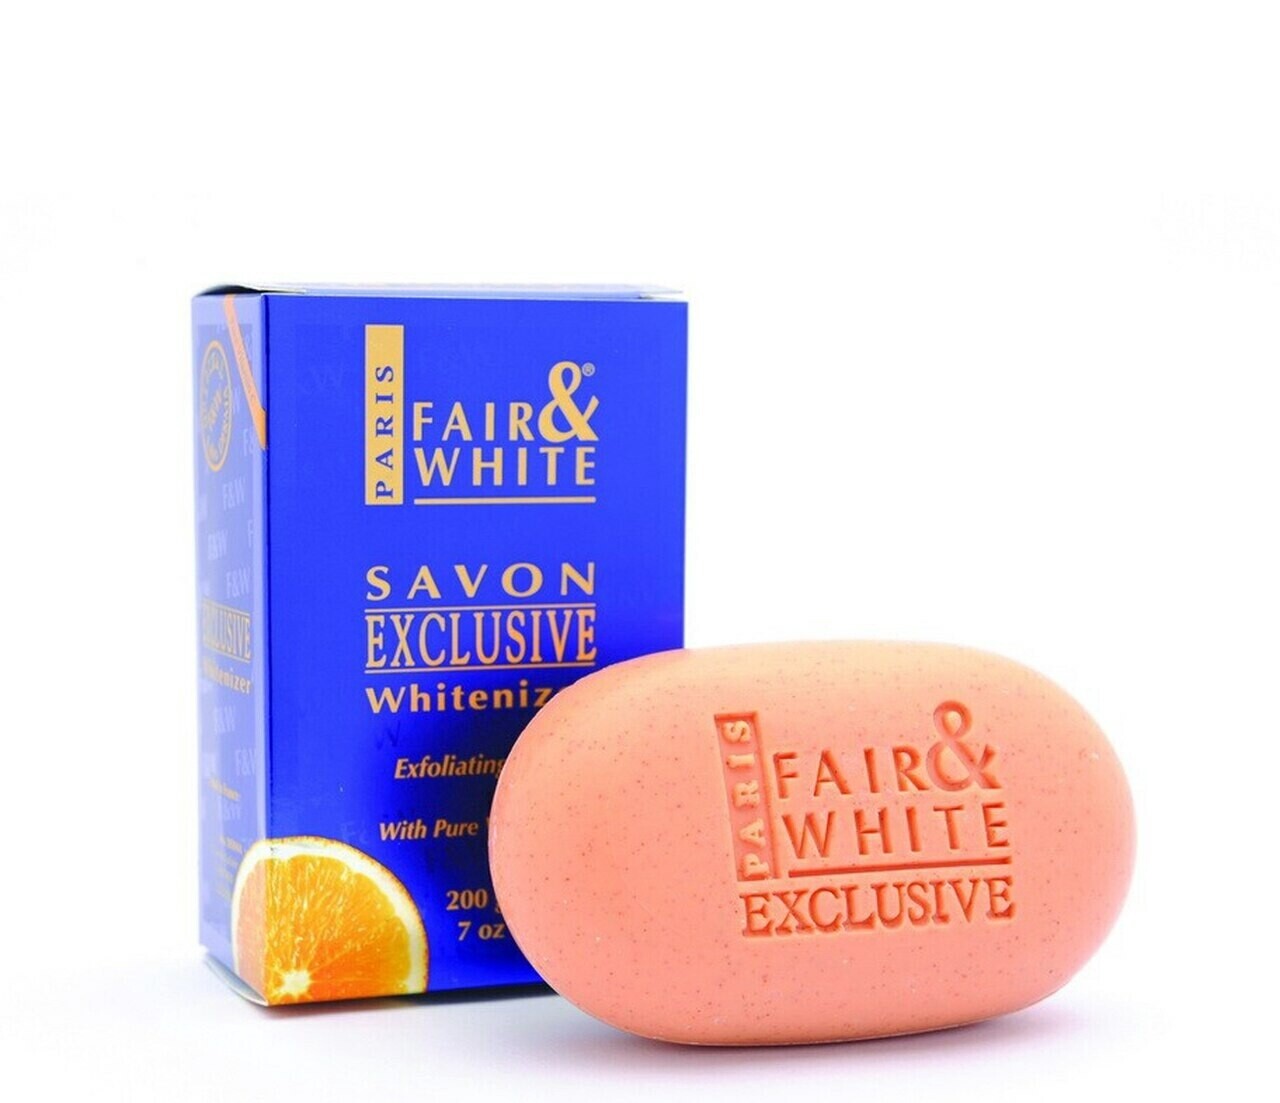 Fair And White Savon Exclusive Whitenizer Exfoliating Soap with Vitamin C